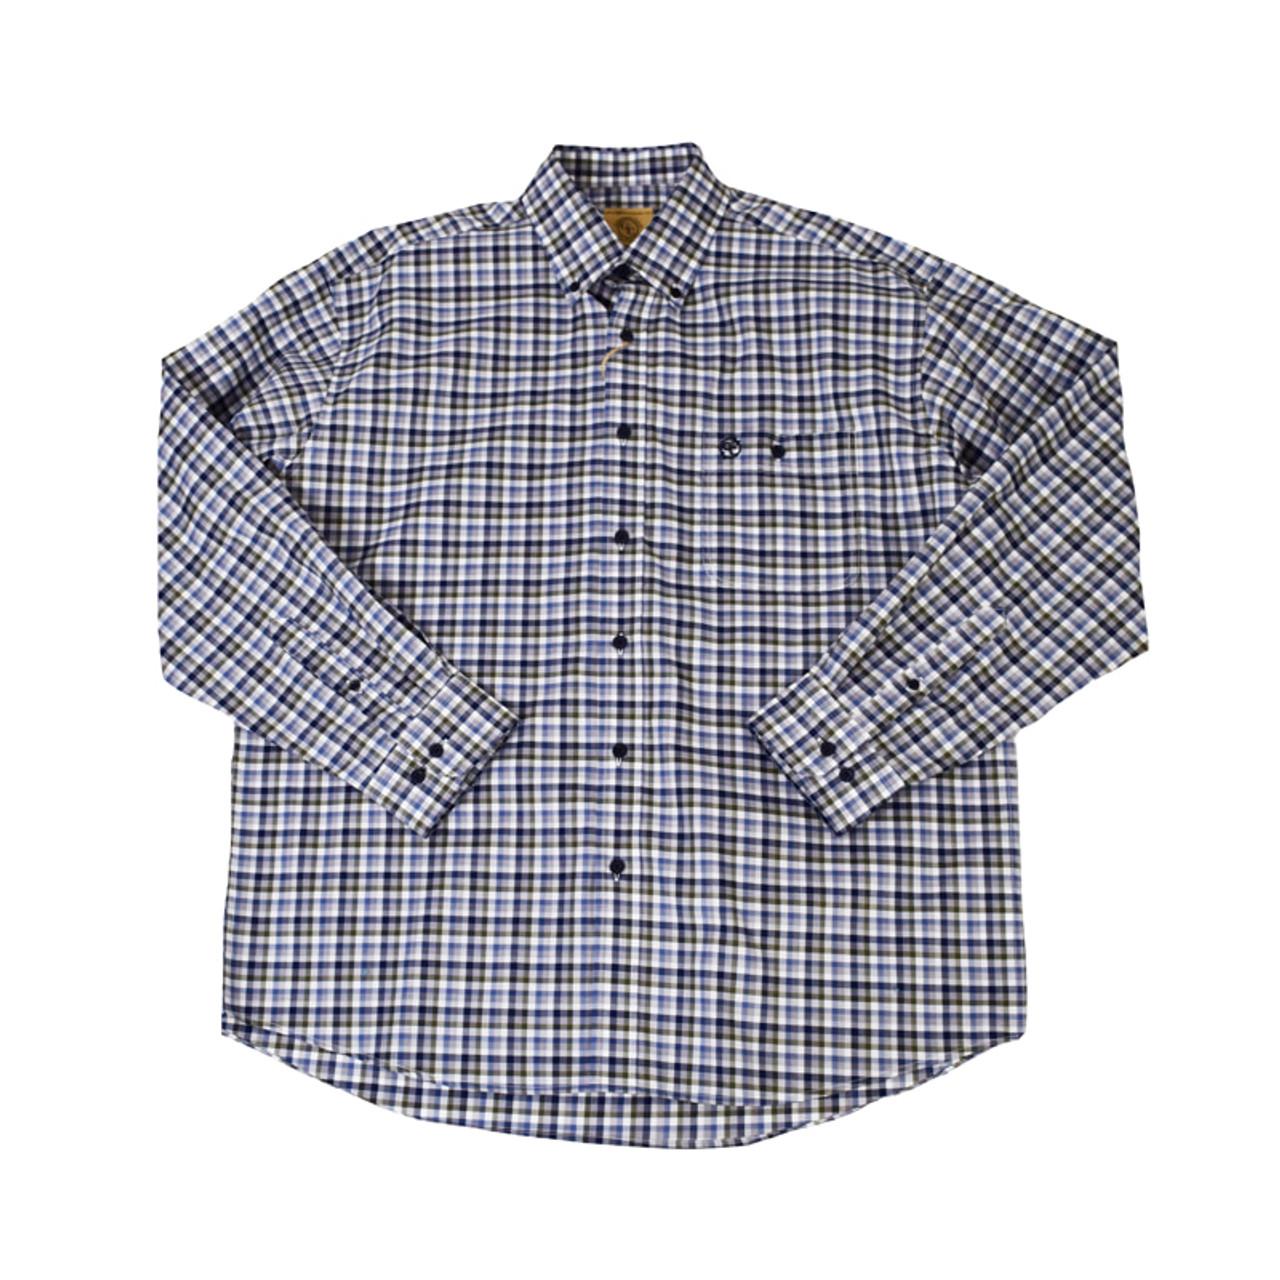 Gunnison Creek Men's Olive/White Plaid Long Sleeve Button Up Shirt